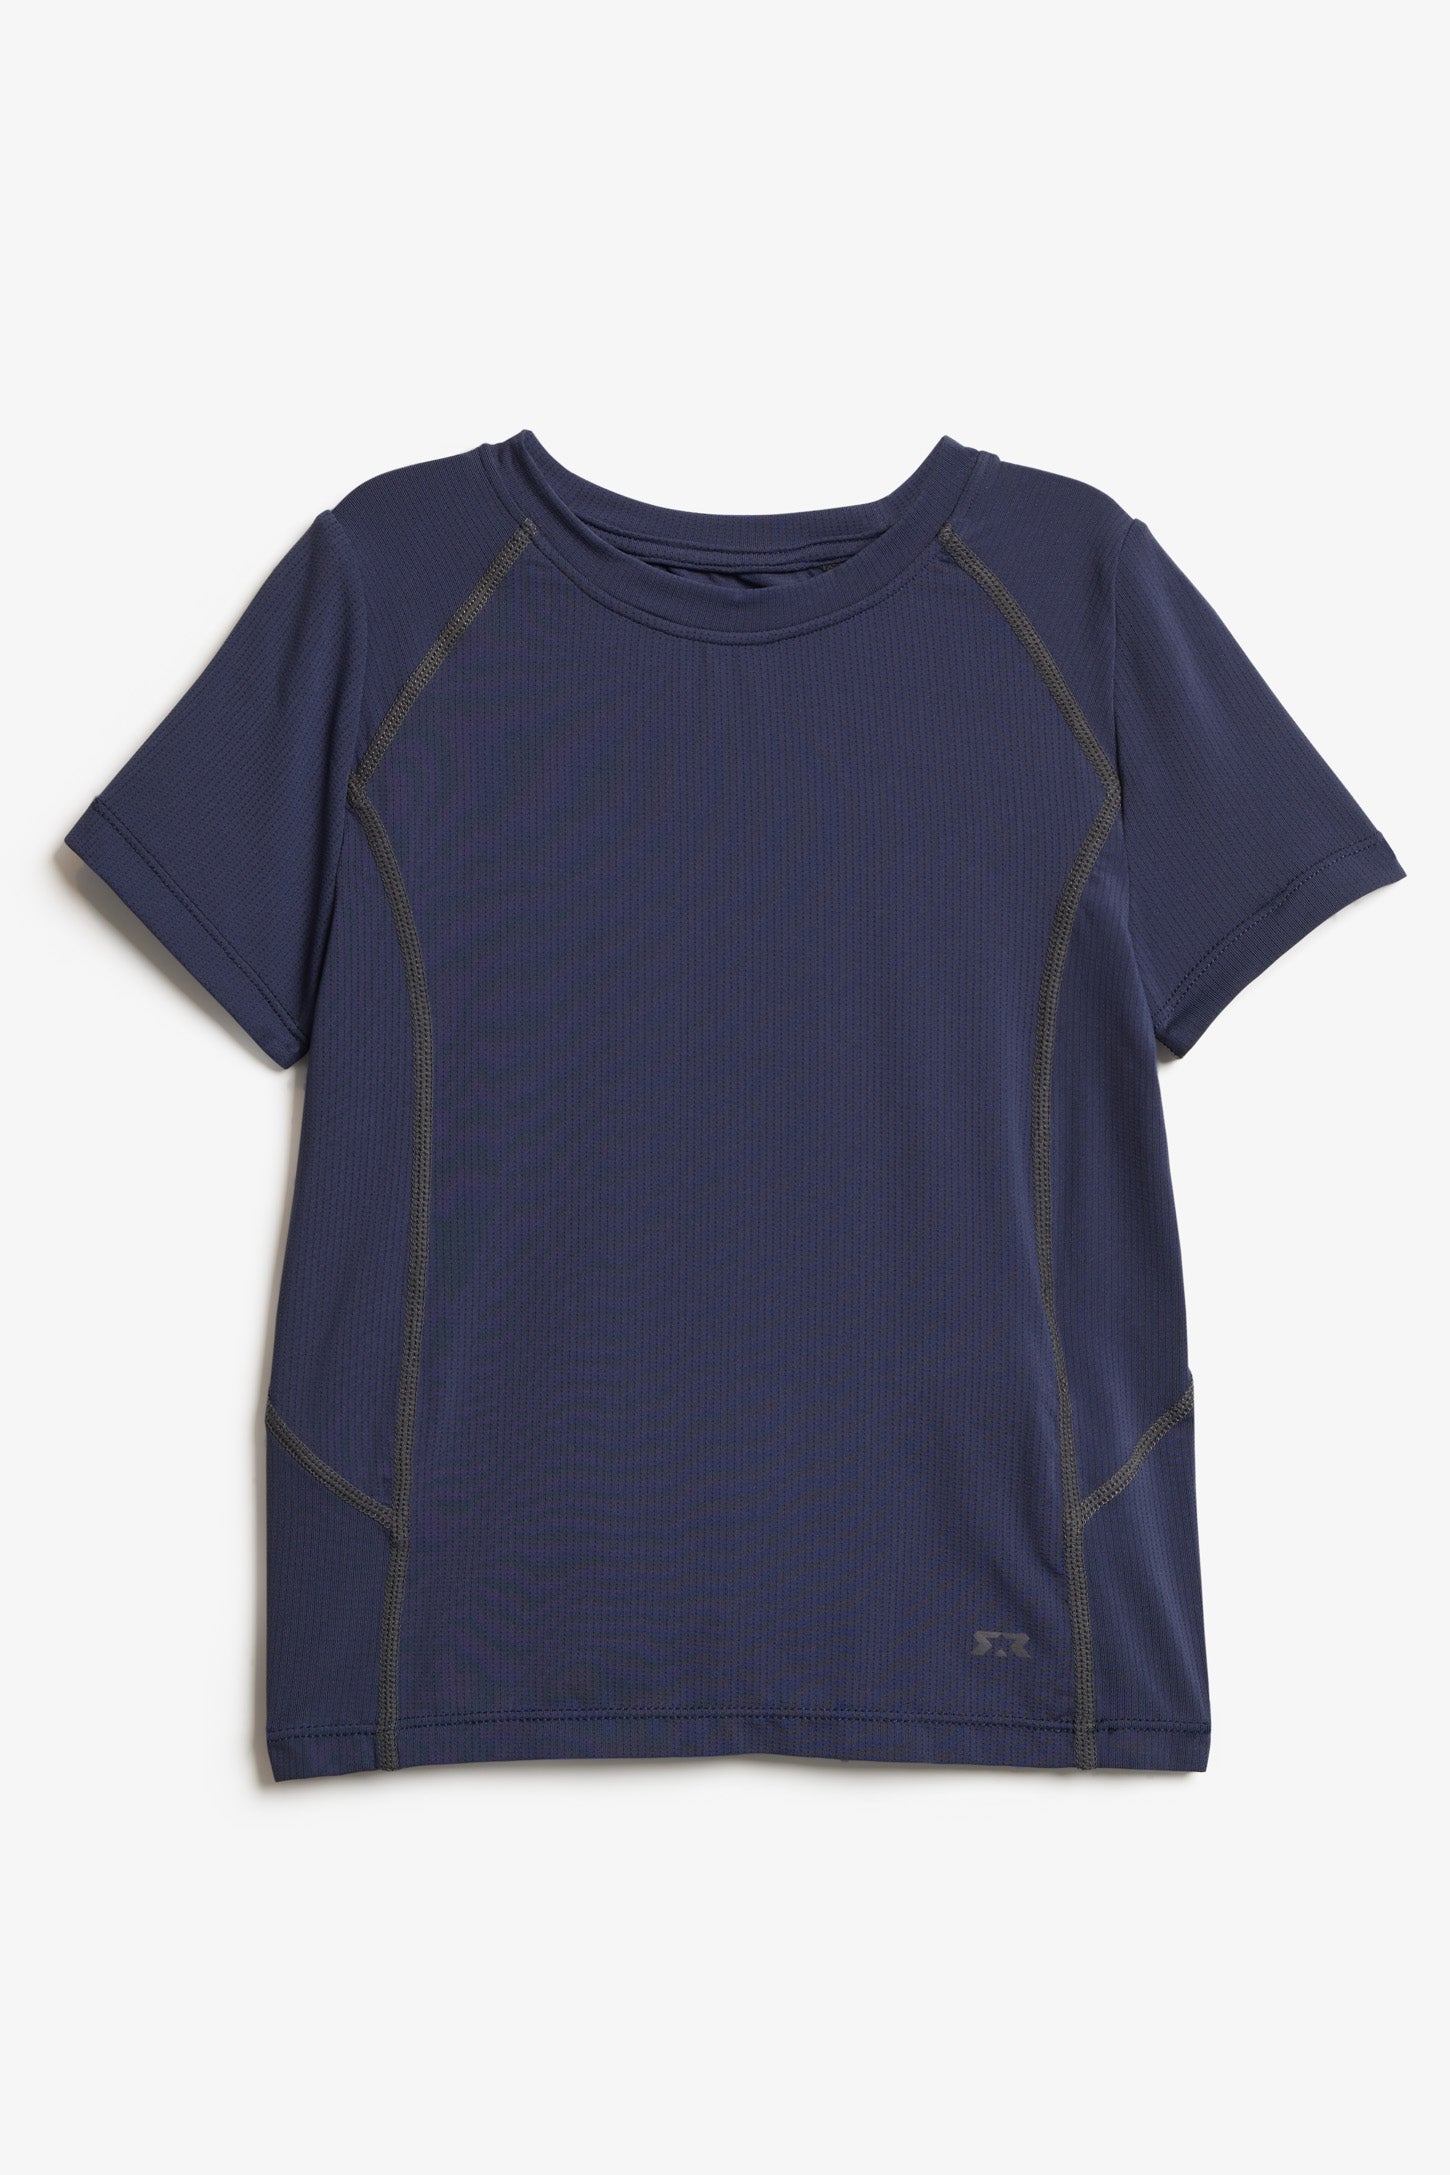 T-shirt HR en microfibres, 2/20$ - Enfant garçon && DENIM